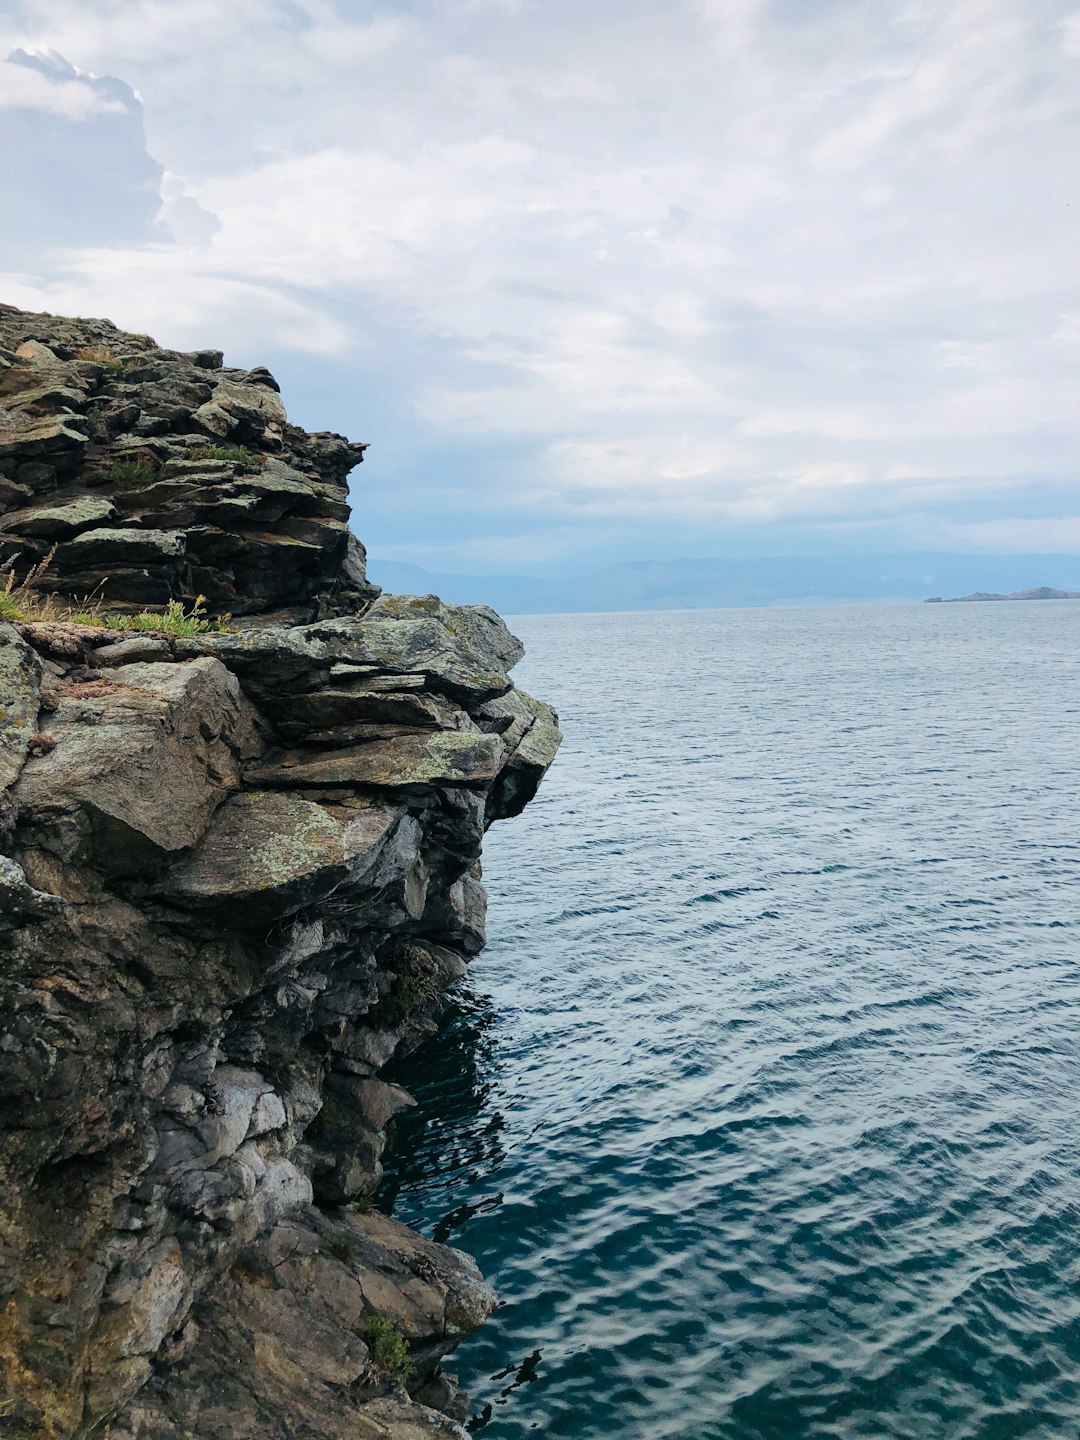 travelers stories about Cliff in Баяндай — Еланцы — Хужир, Russia